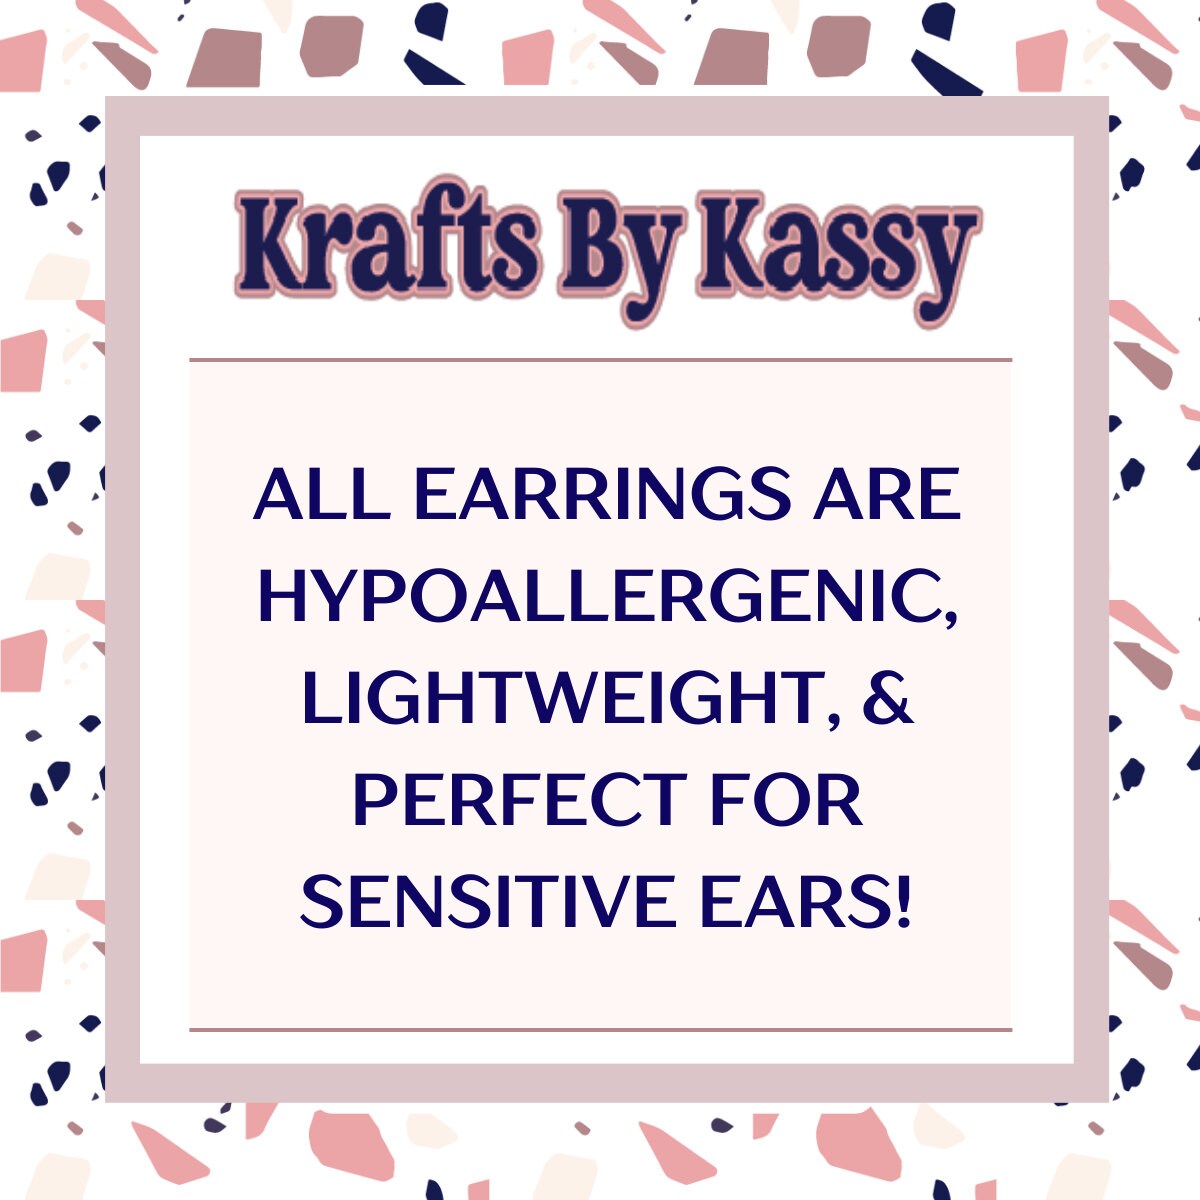 XO Acrylic Earrings, Valentine Jewelry, Fun Accessories, Statement Acrylic Earrings, Heart Acrylic Earrings, Pink Marble